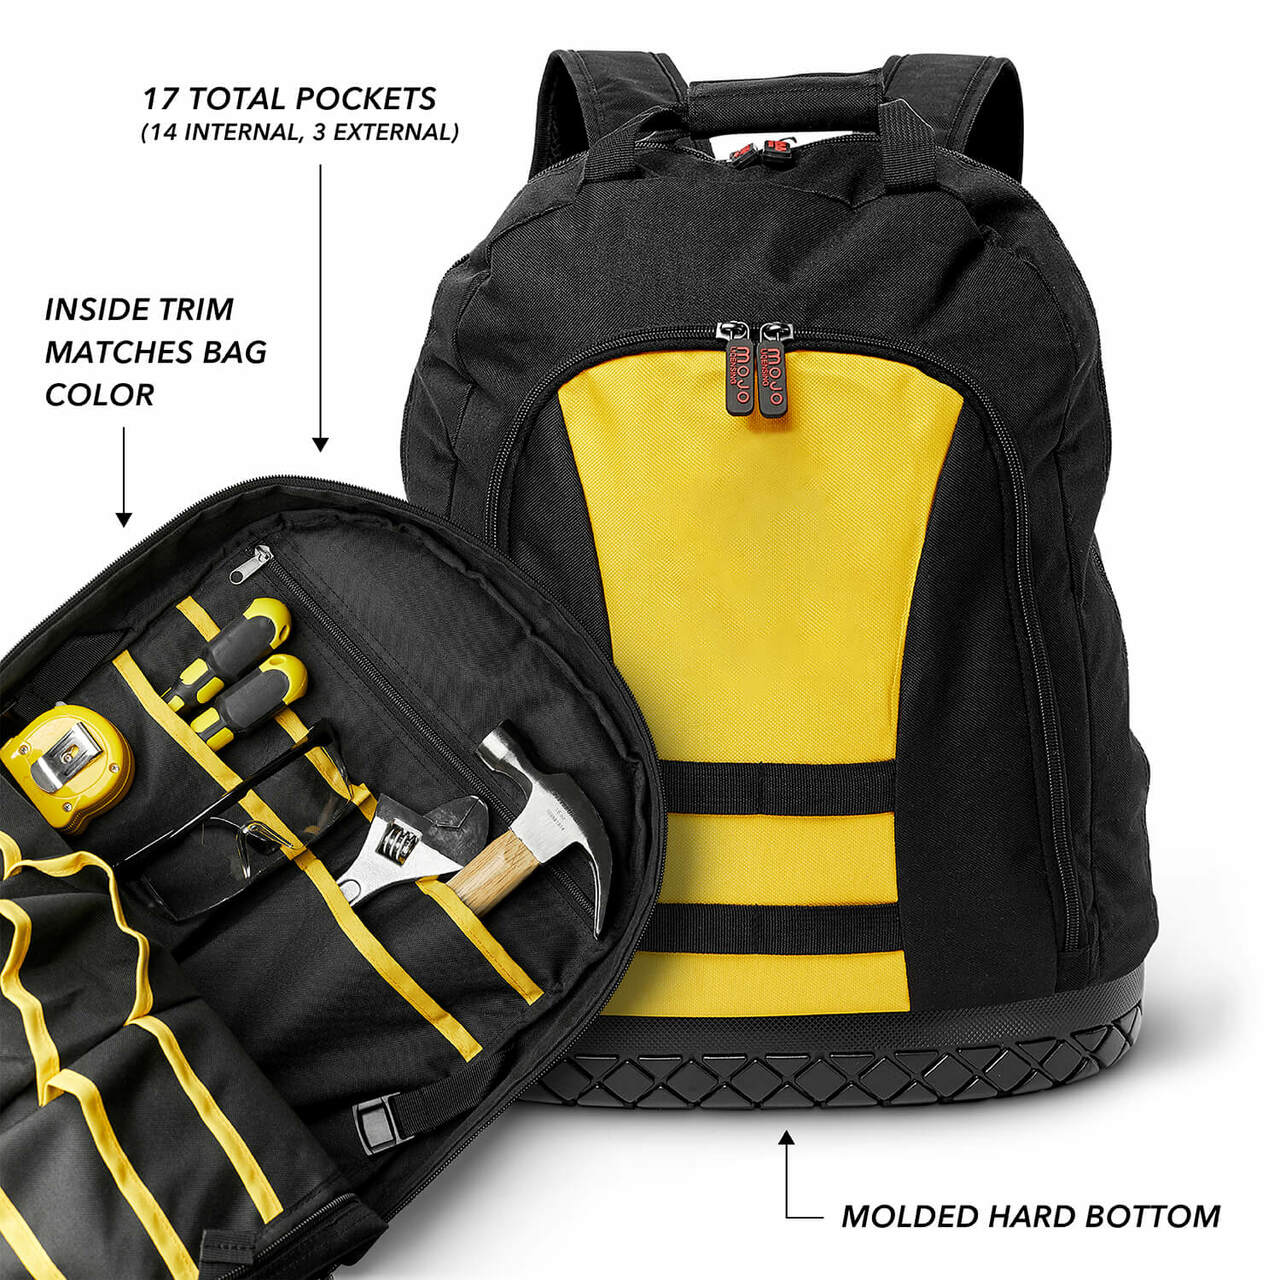 Northwestern Tool Bag Backpack